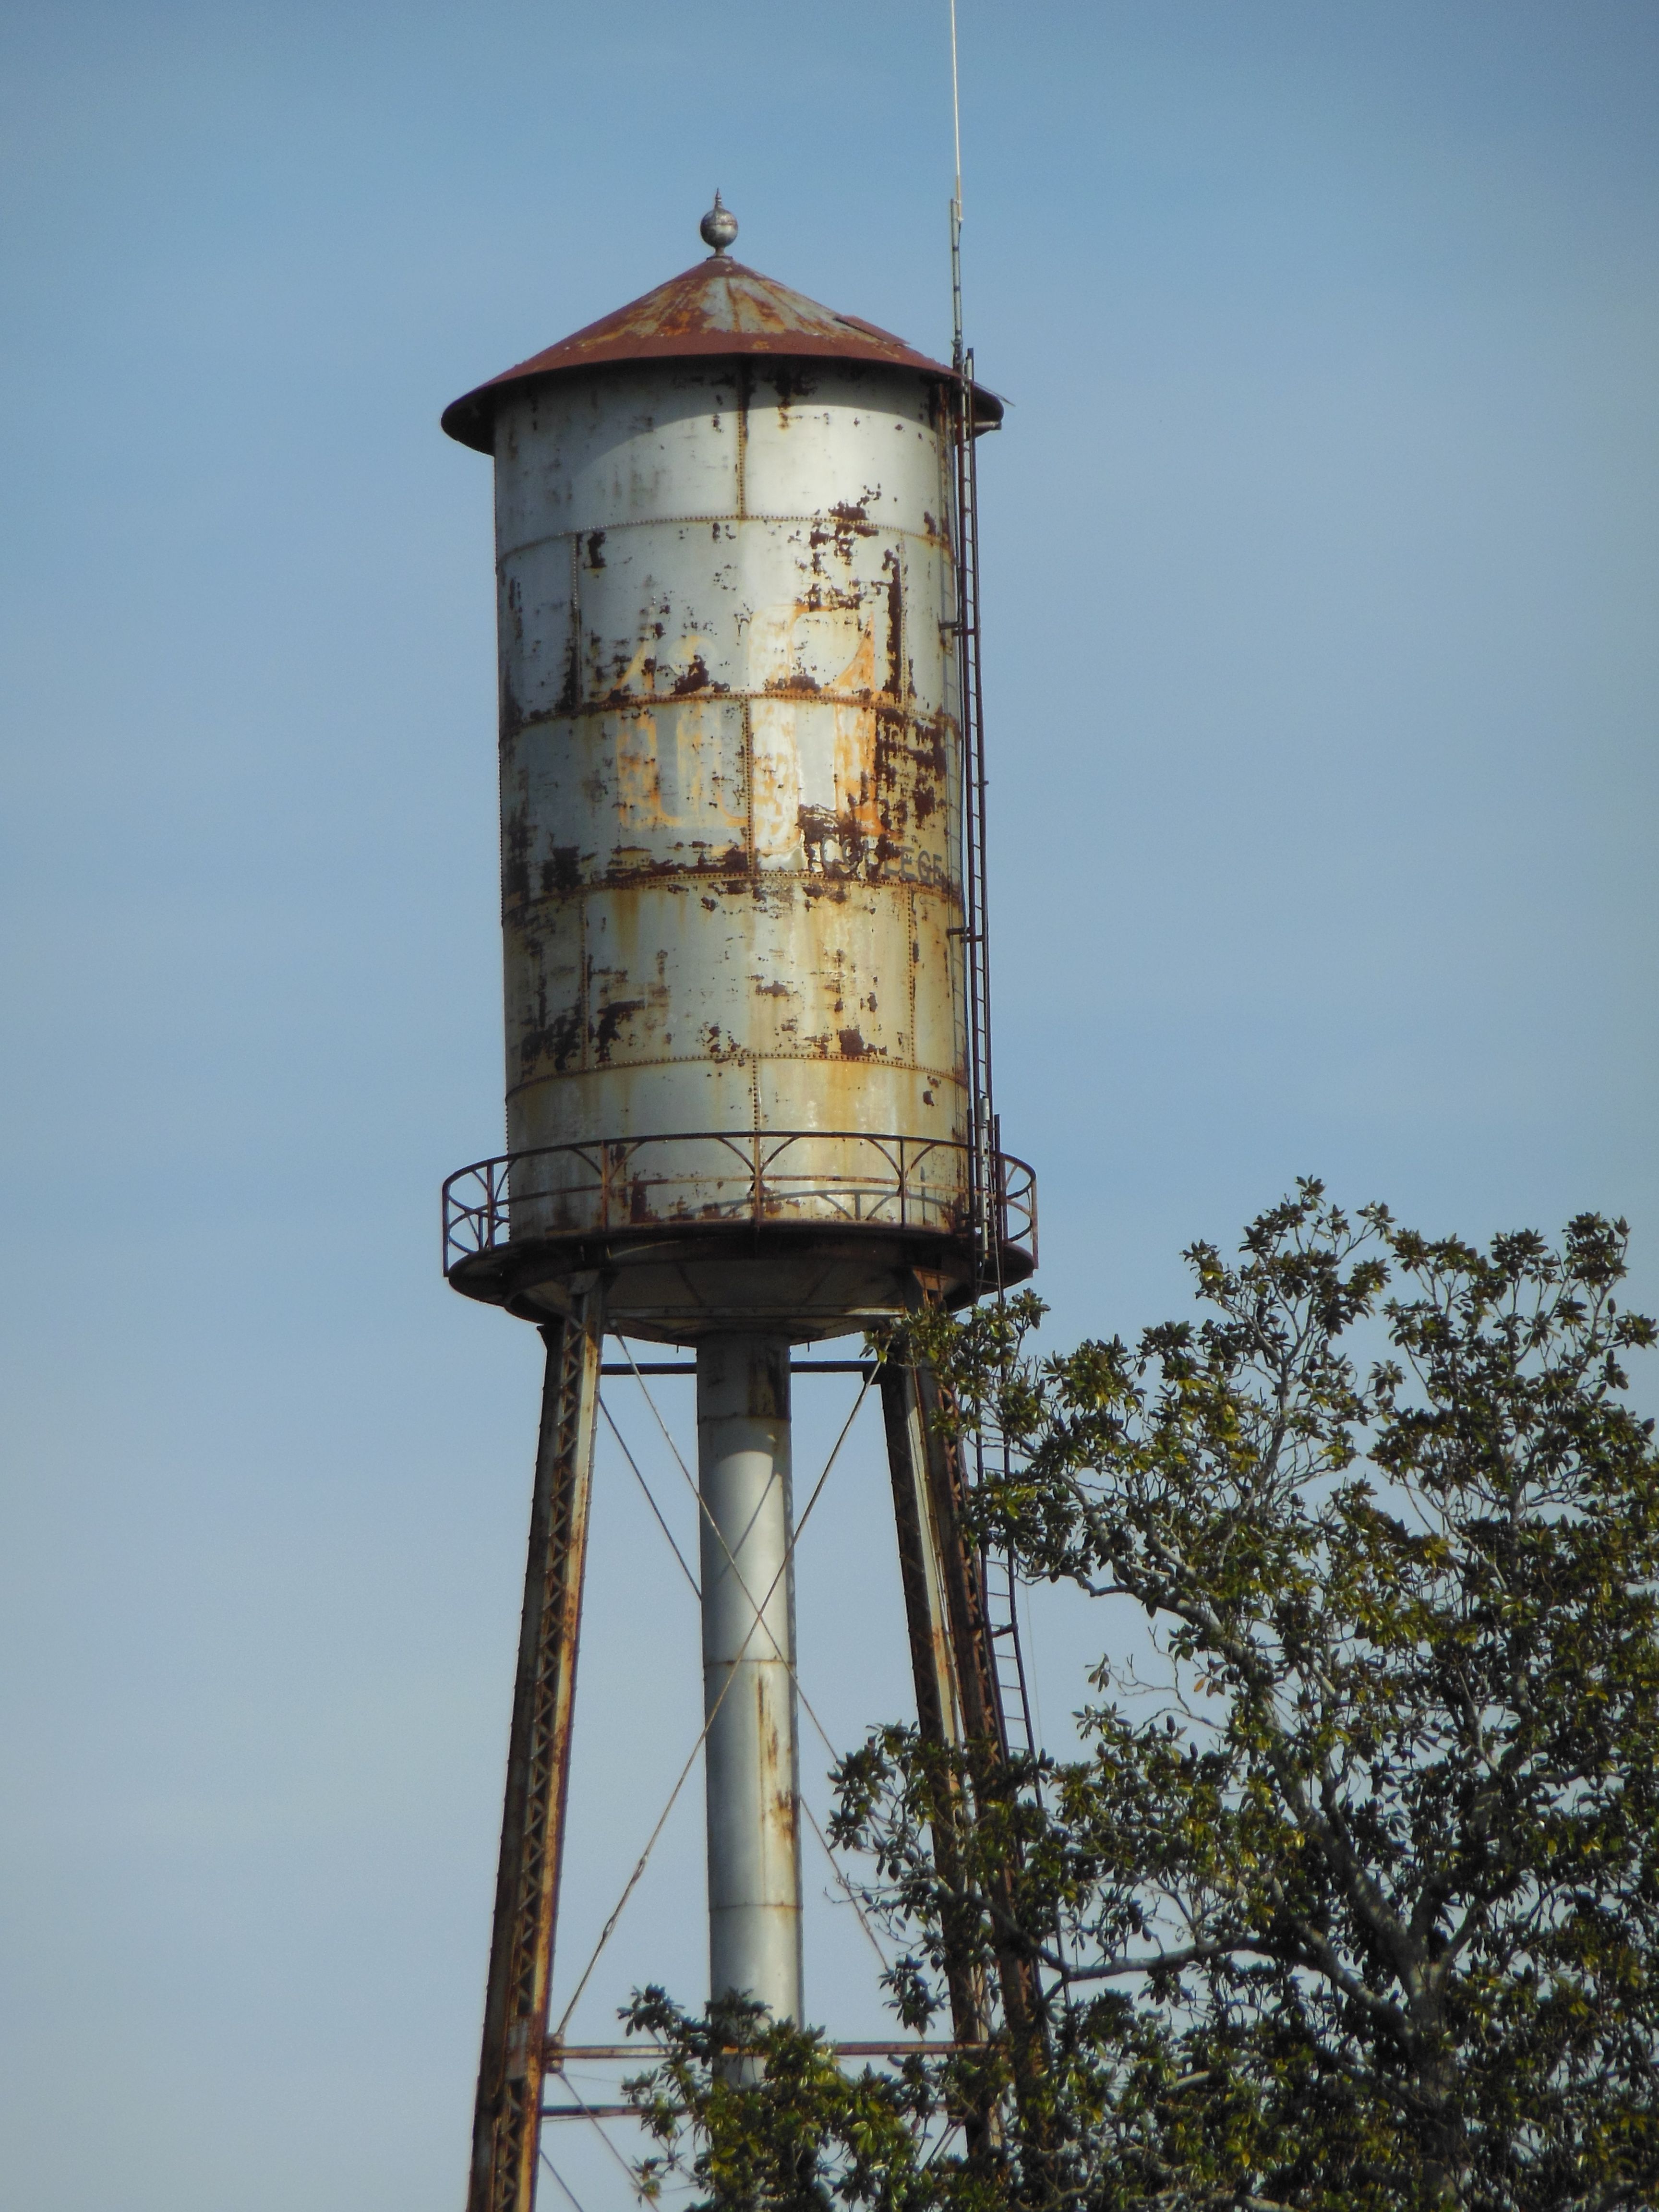 Old Water Tower / Forsyth Georgia | My Georgia Photographs's ...